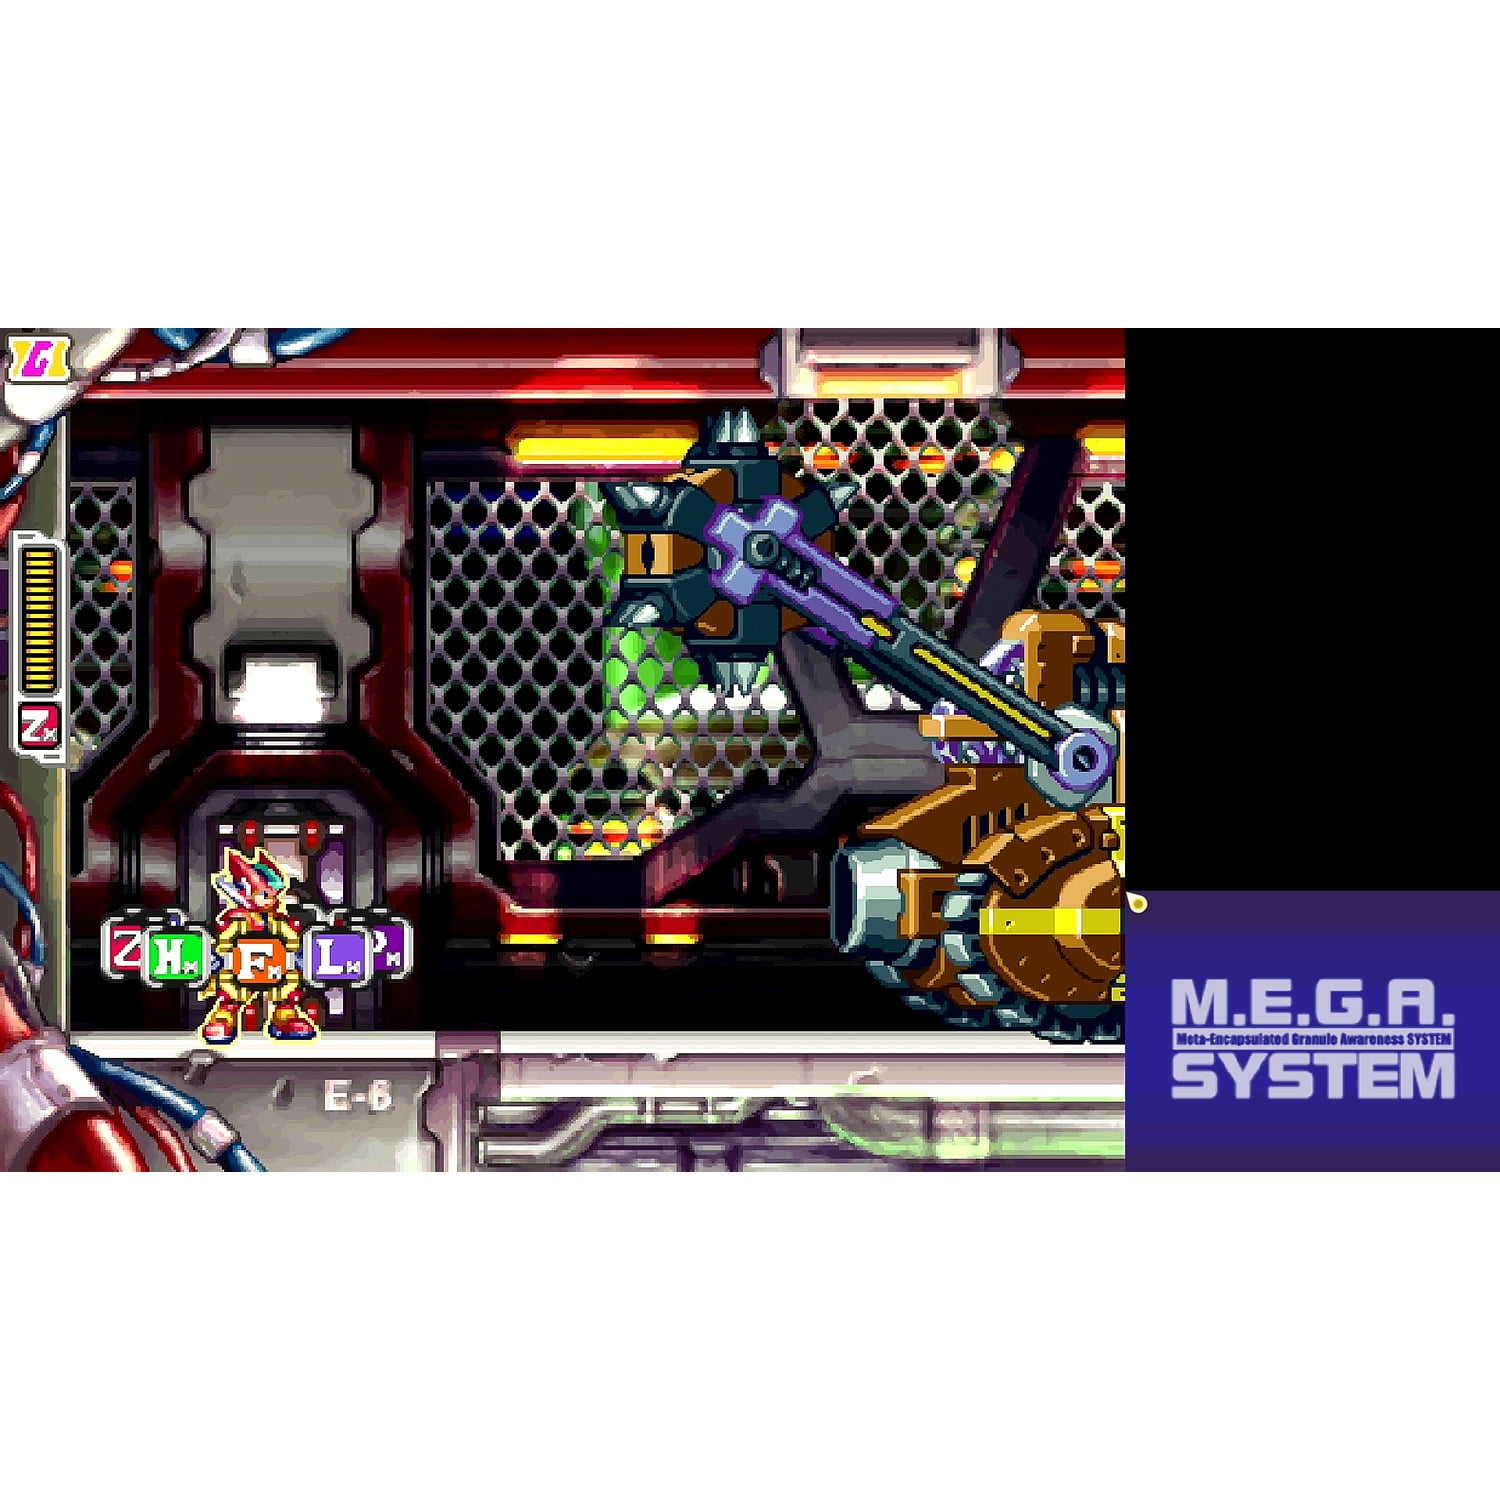 MEGA MAN Zero/ZX Legacy Collection, Capcom, Nintendo Switch, [Physical],  013388410187